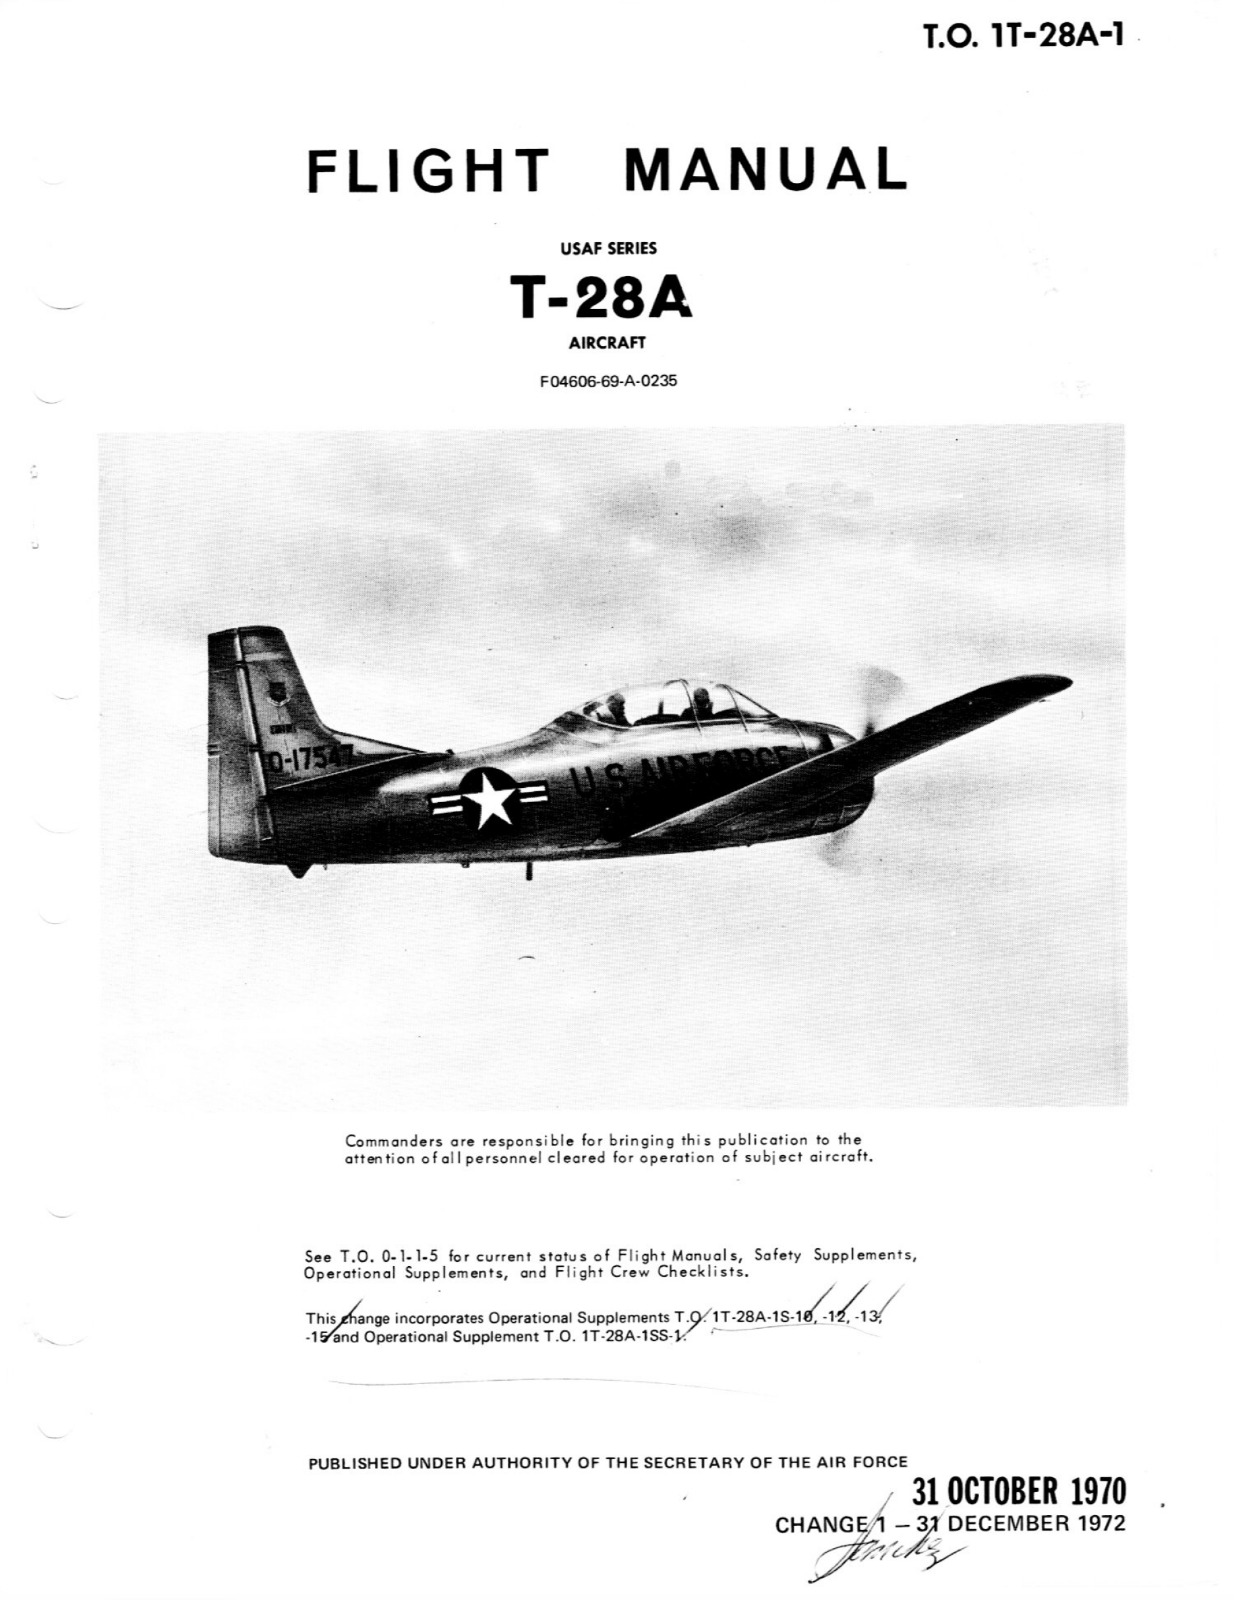 154 Page 1970 1972 AF T-28 A Trojan Trainer T.O. 1T-28A-1 Flight Manual on CD